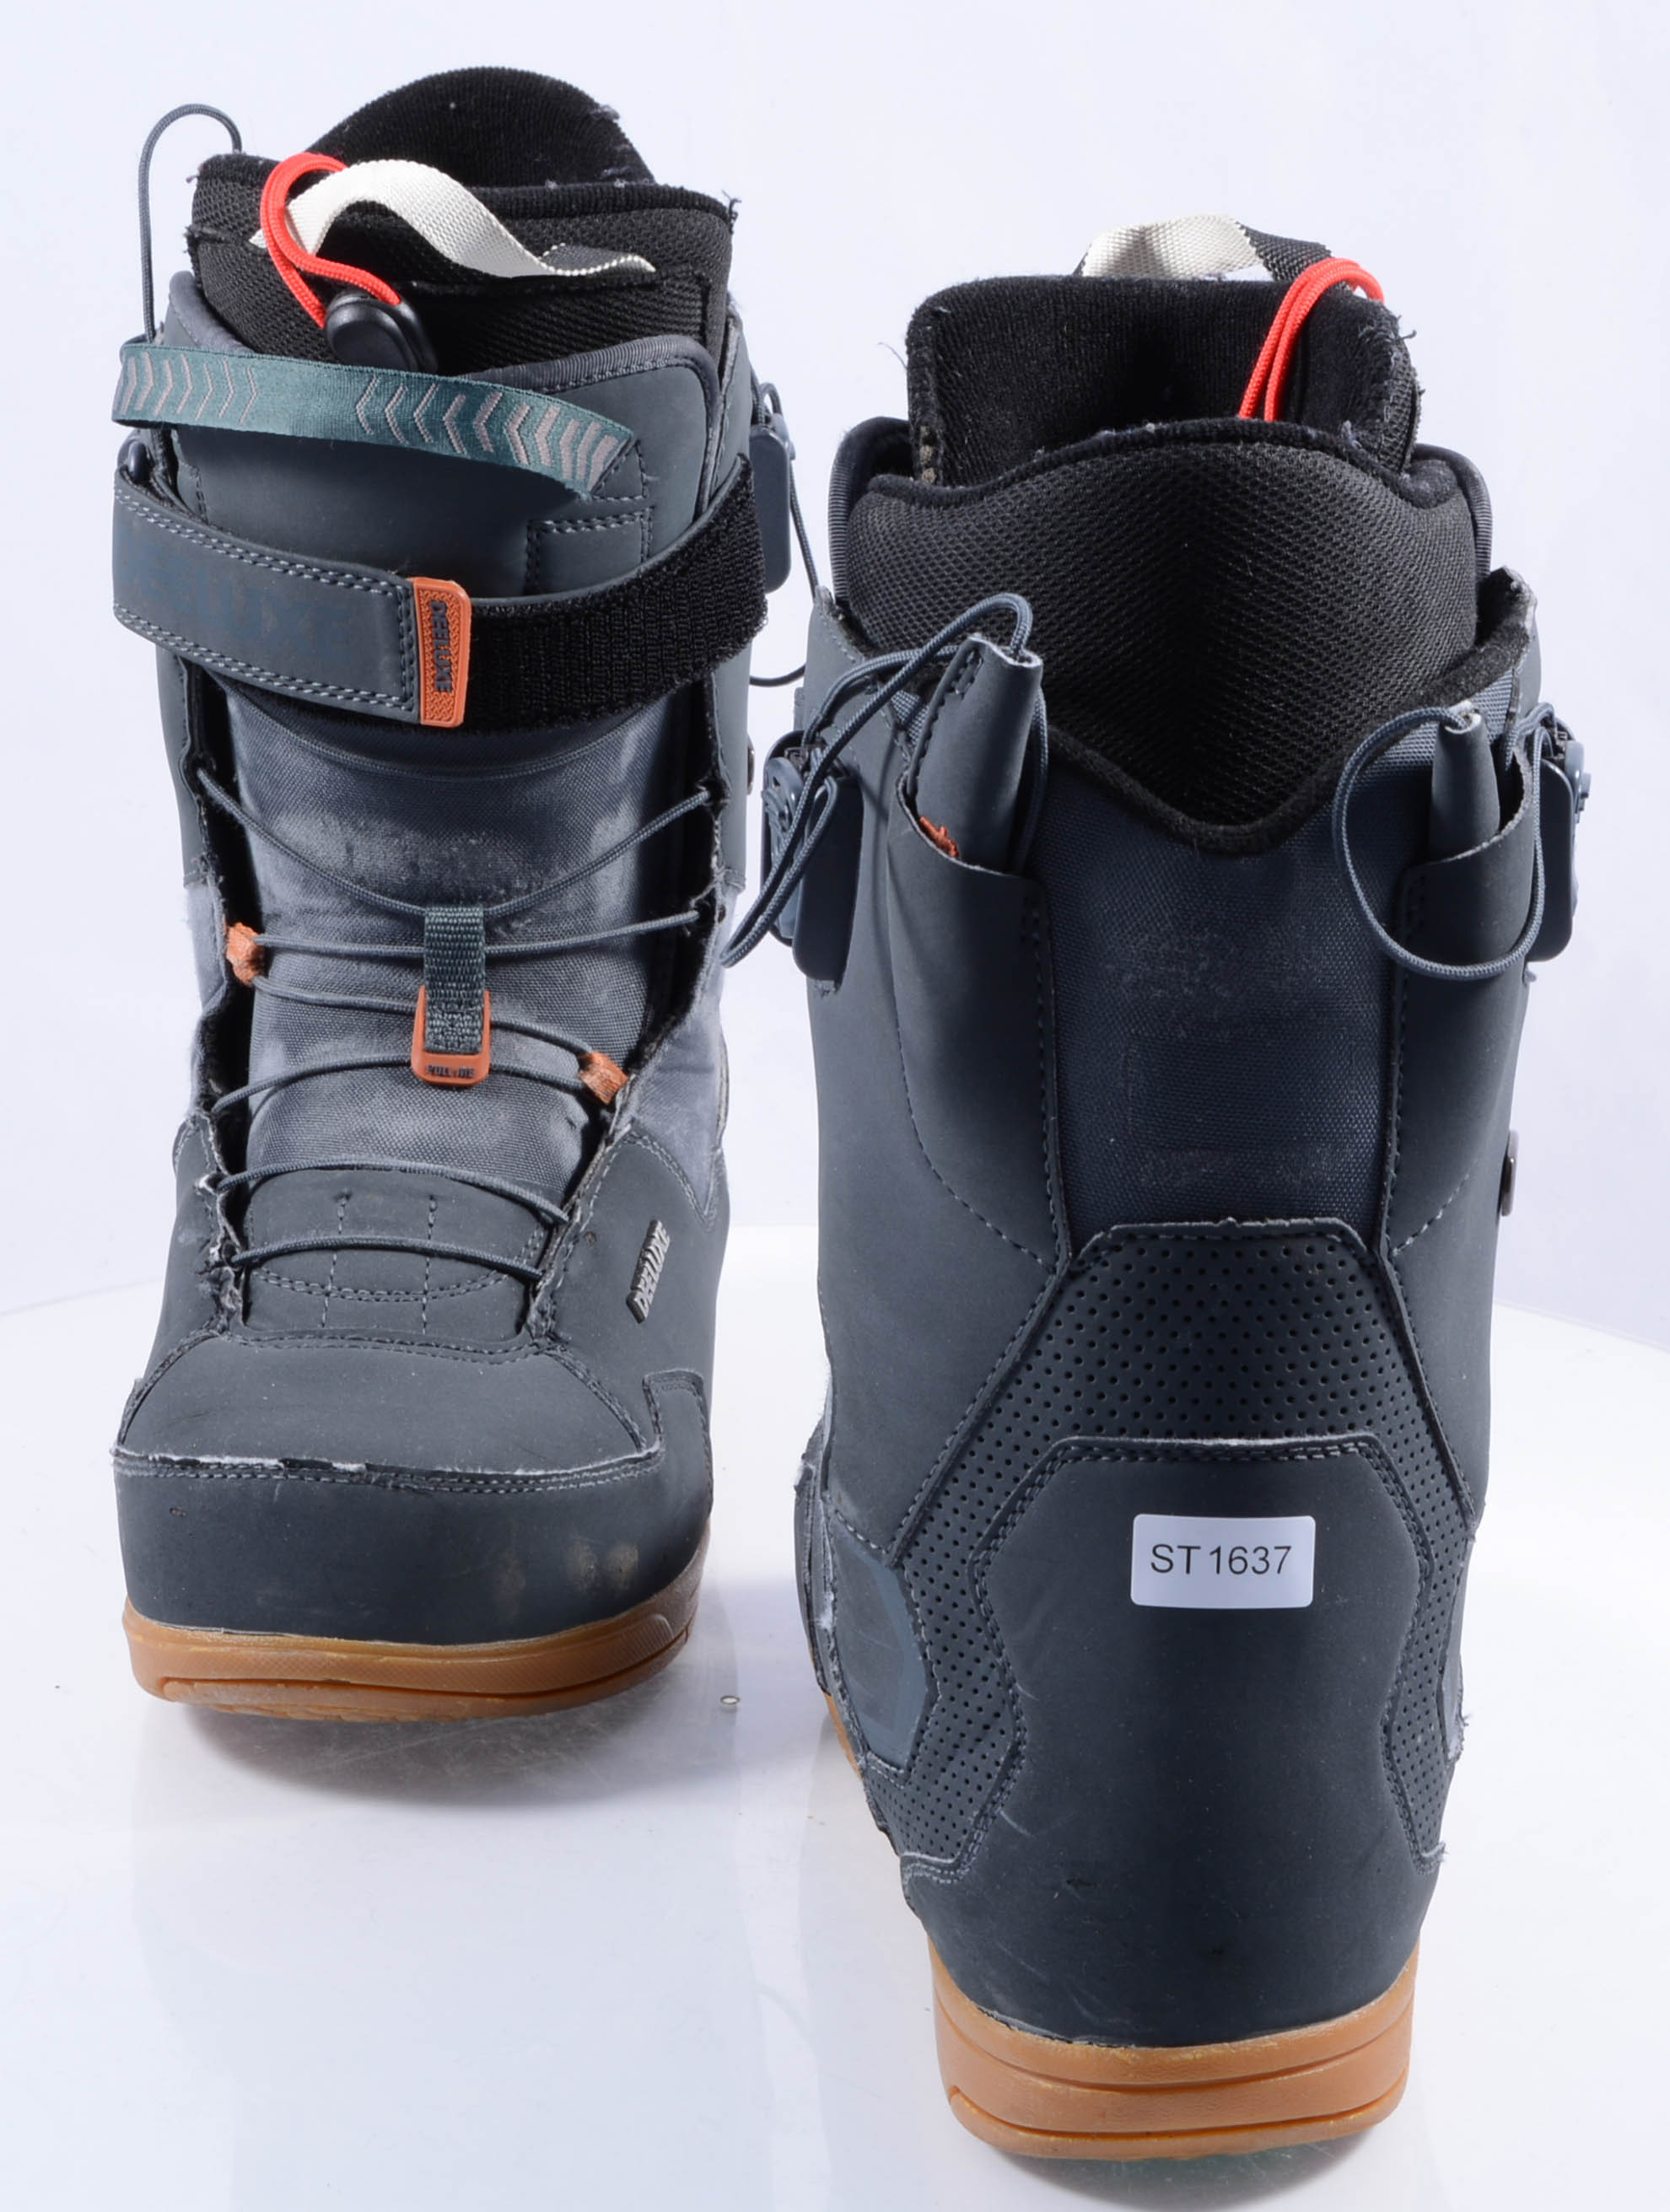 snowboard boots DEELUXE ID 7.1 CF, grey - Mardosport.com